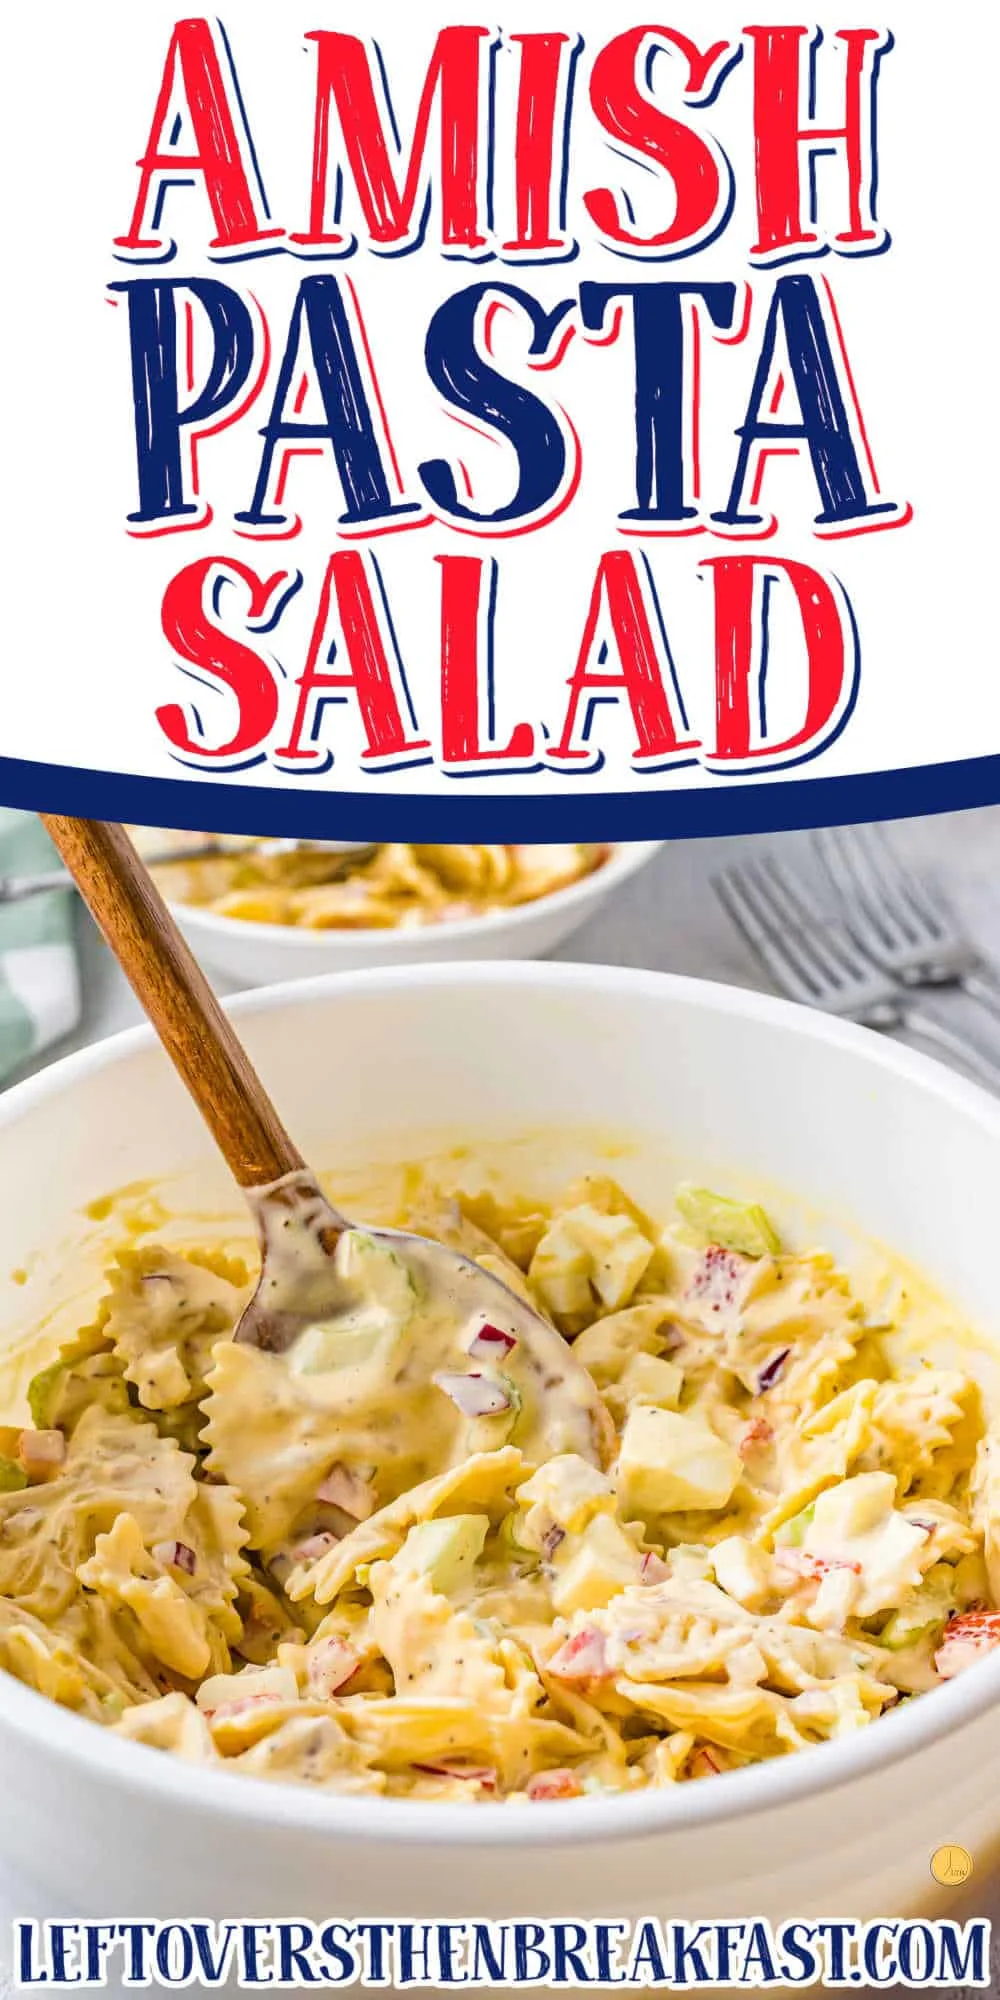 bowl of pasta salad with text "amish pasta salad"